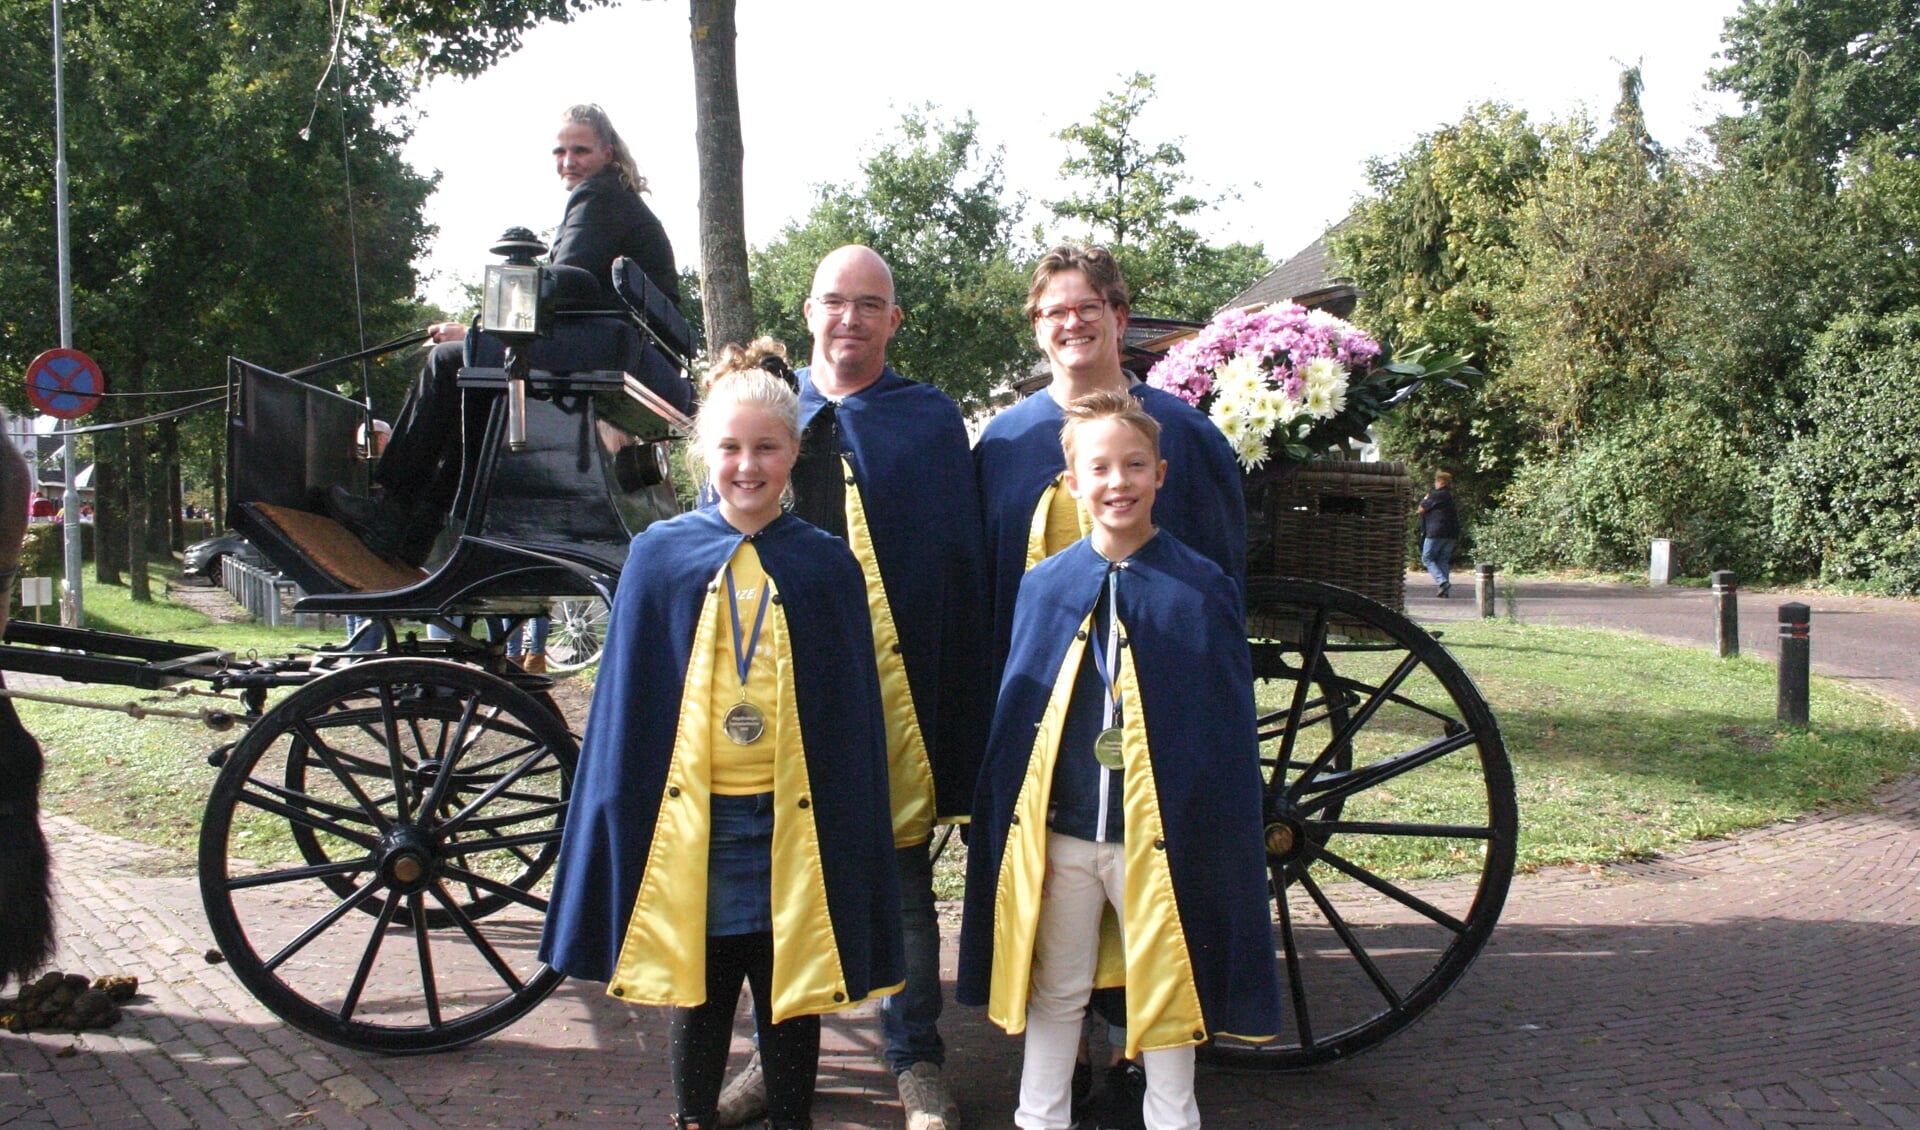 Schutterskoning Richard Jansen samen met knuppelkoningin Alice Veenink, jeugdkoning Derk van Silfhout en jeugdkoningin Lieke Bessels. Foto: PR